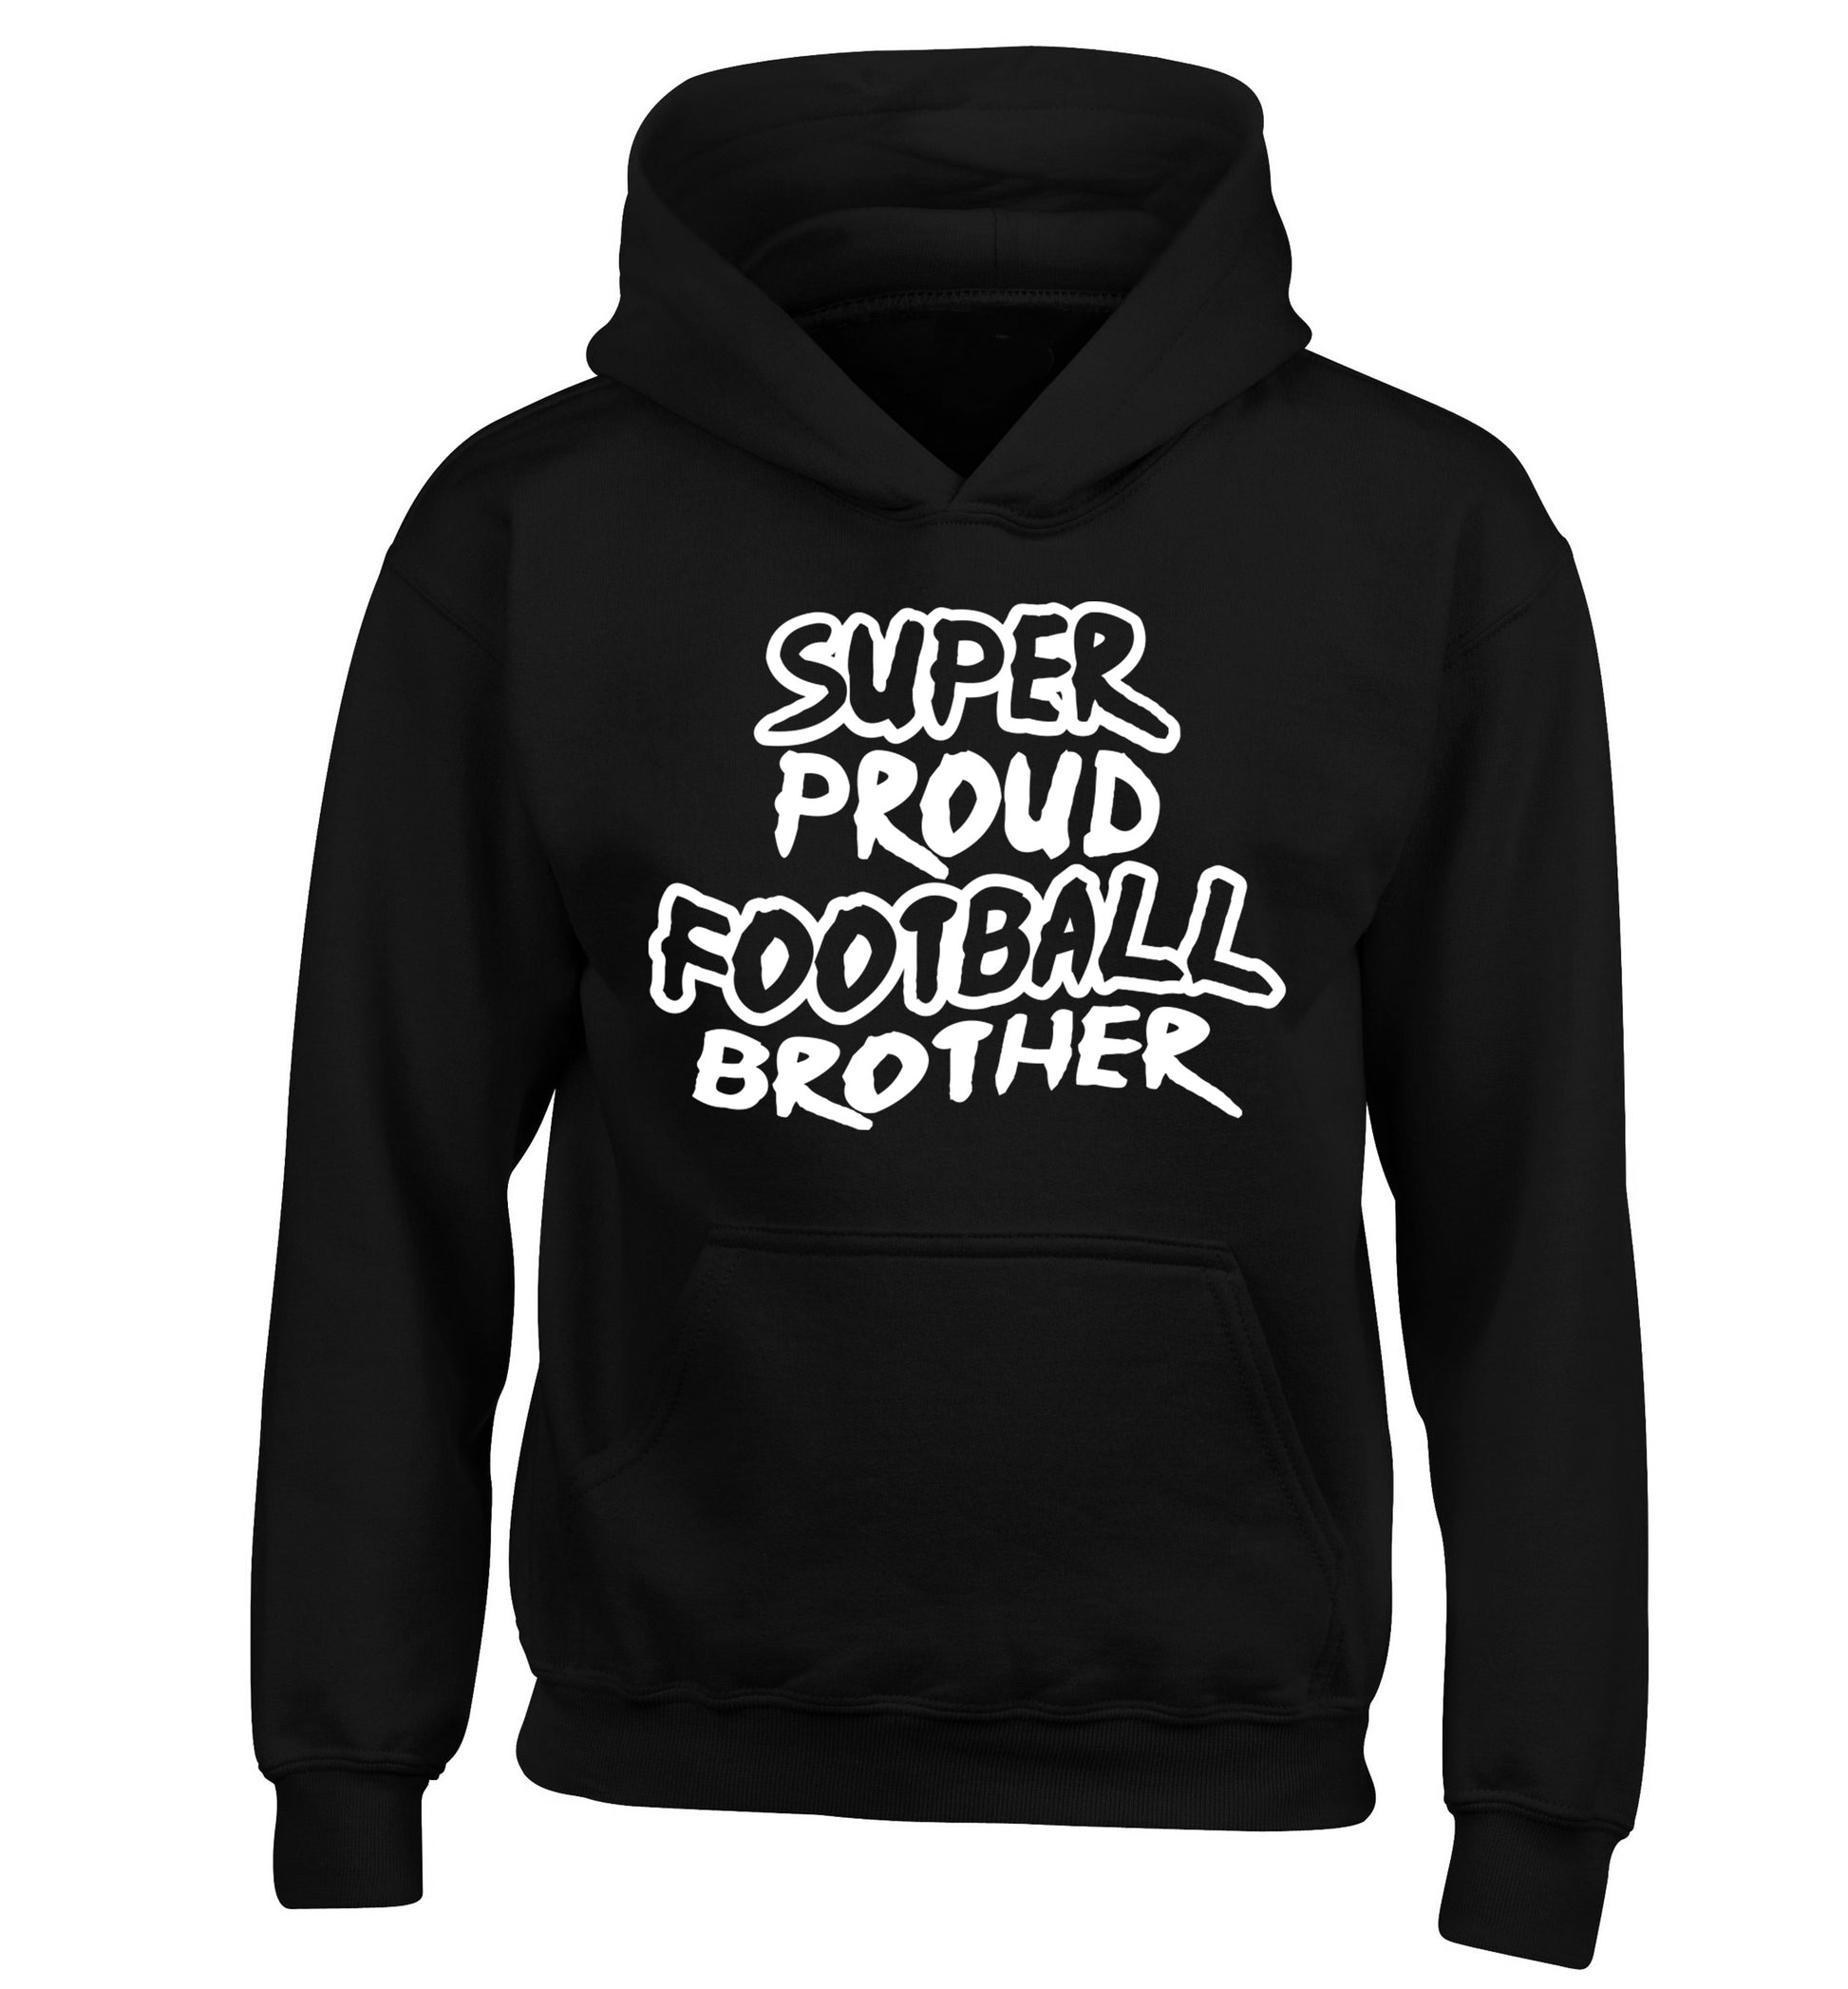 Super proud football brother children's black hoodie 12-14 Years